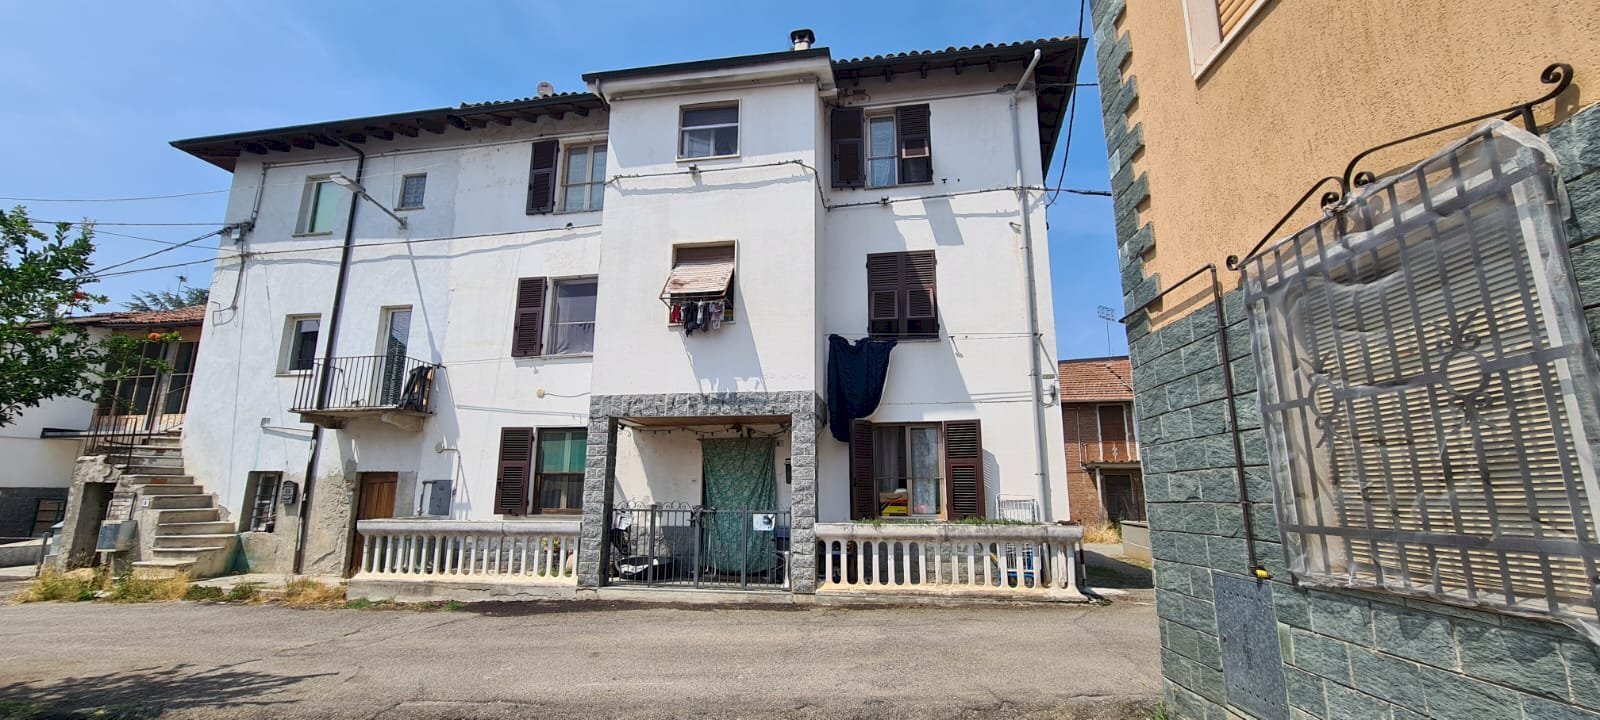 Vendita: Casa indipendente - 98000 € - Francavilla Bisio